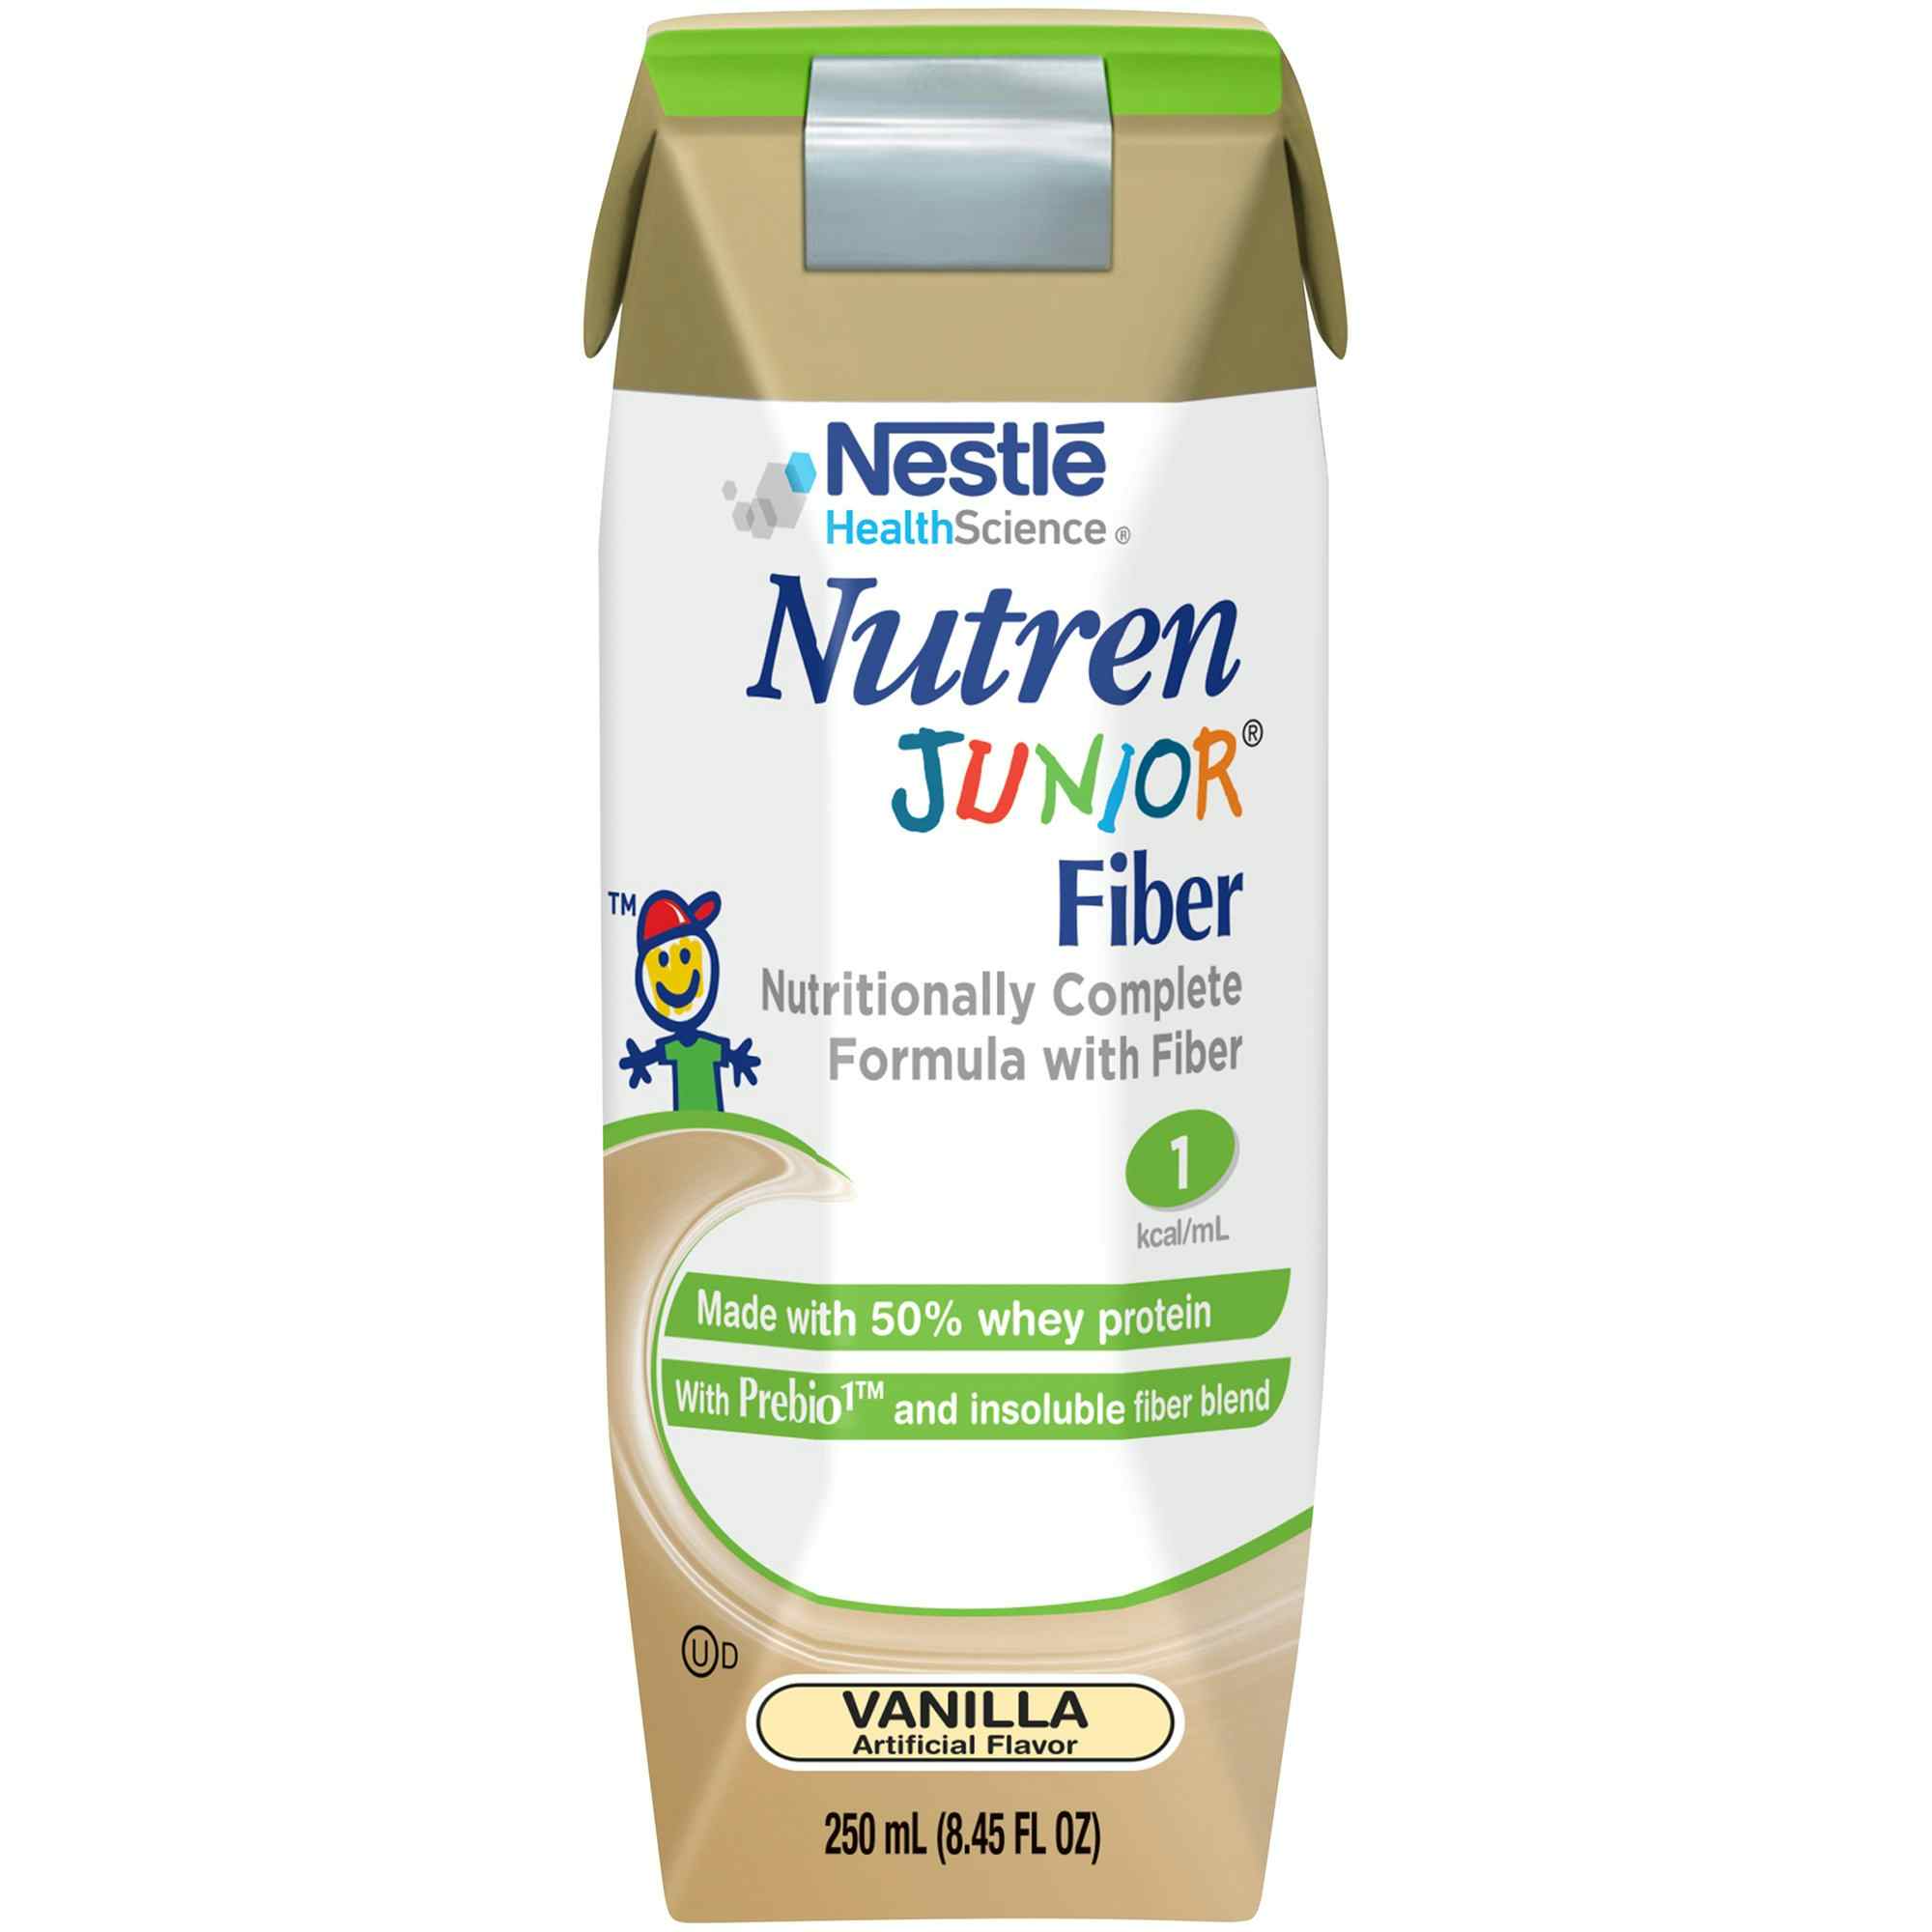 Nestle HealthScience Nutren Junior Fiber Nutritionally Complete Formula with Fiber, Vanilla, 8.45 oz., 9871616063, Case of 24